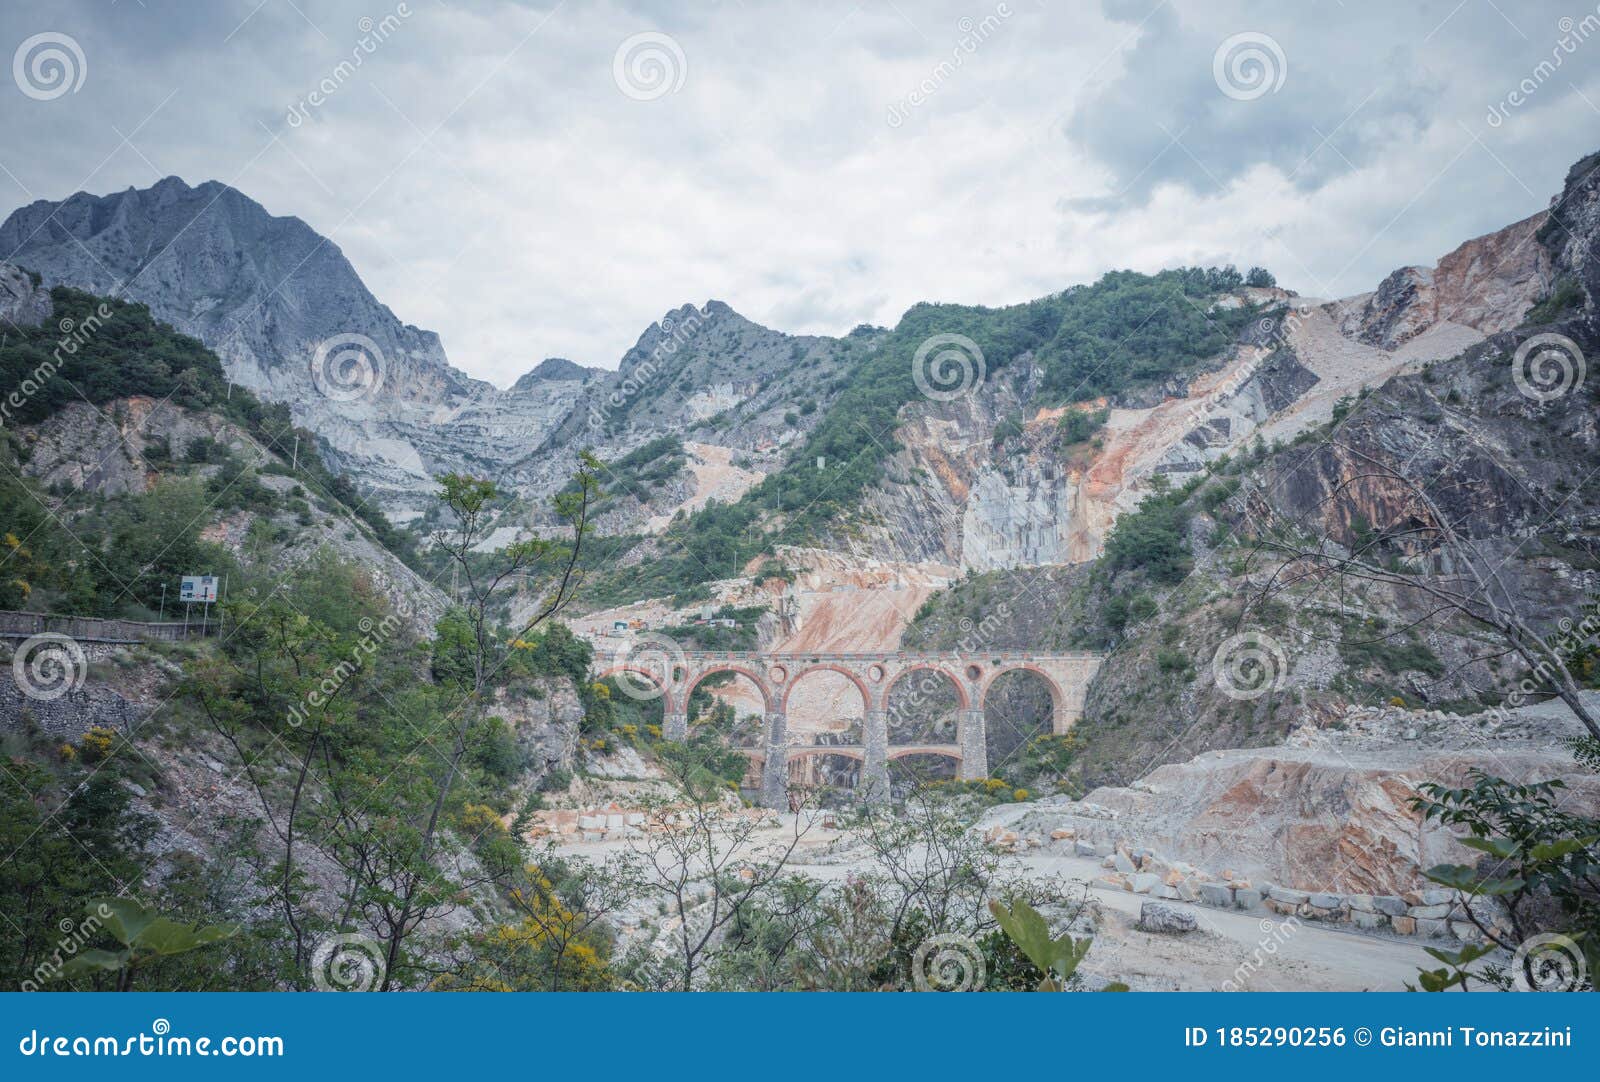 ponti di vara, famous ancient bridge over the fantiscritti marble quarries